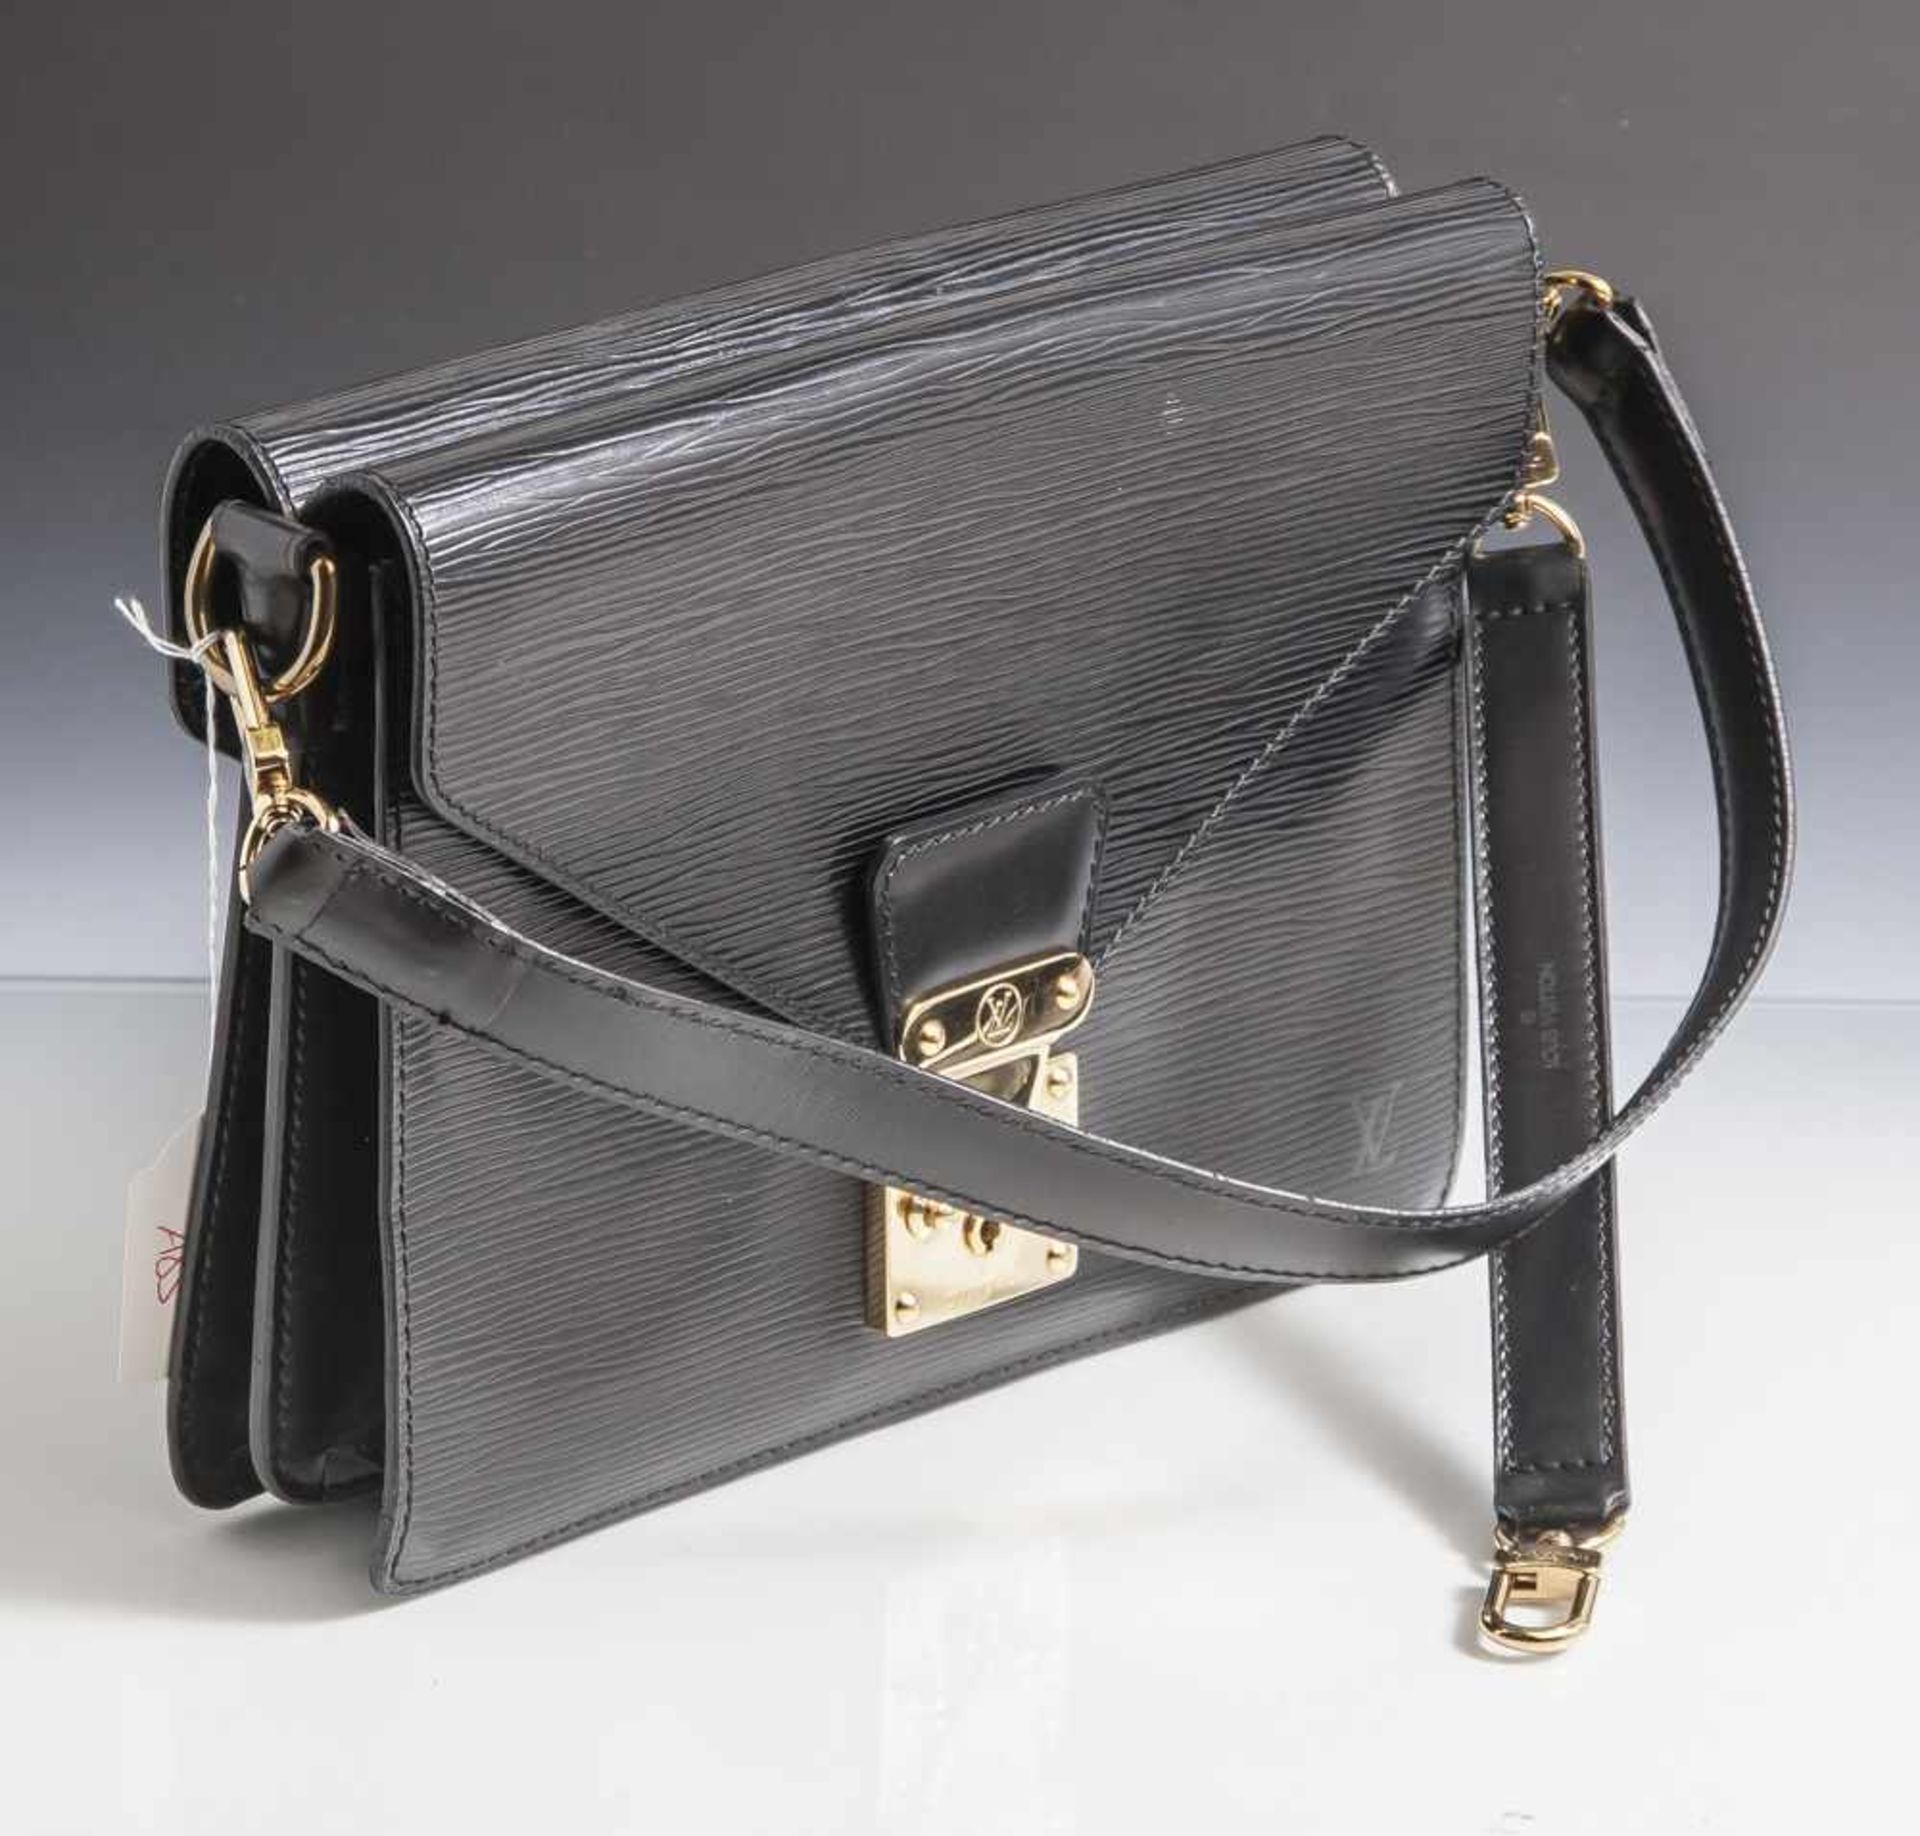 Louis Vuitton Damenhandtasche, Schultertasche, Modell "Epi Monceau", schwarz, innen Nr. A20960 sowie